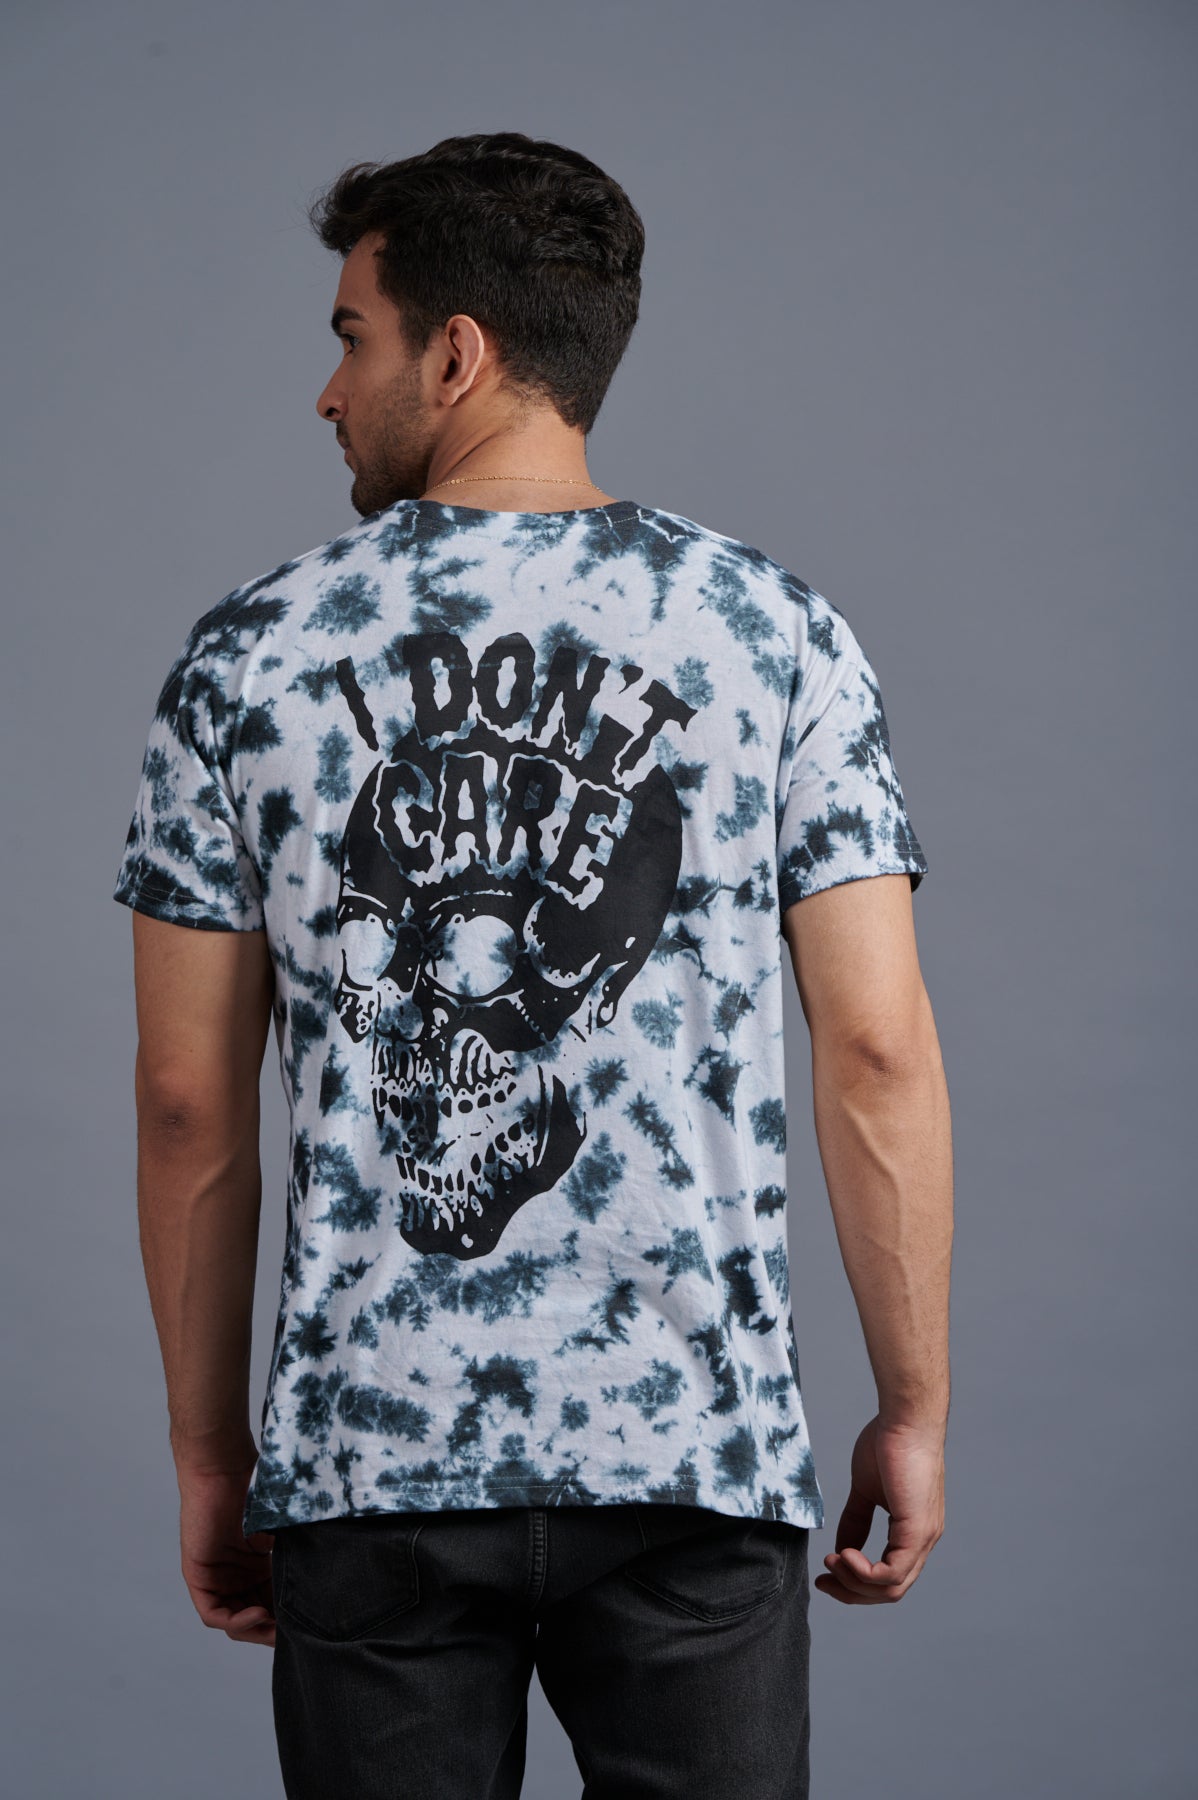 I Don't Care Printed Multi-Color Oversized T-Shirt for Men - Go Devil